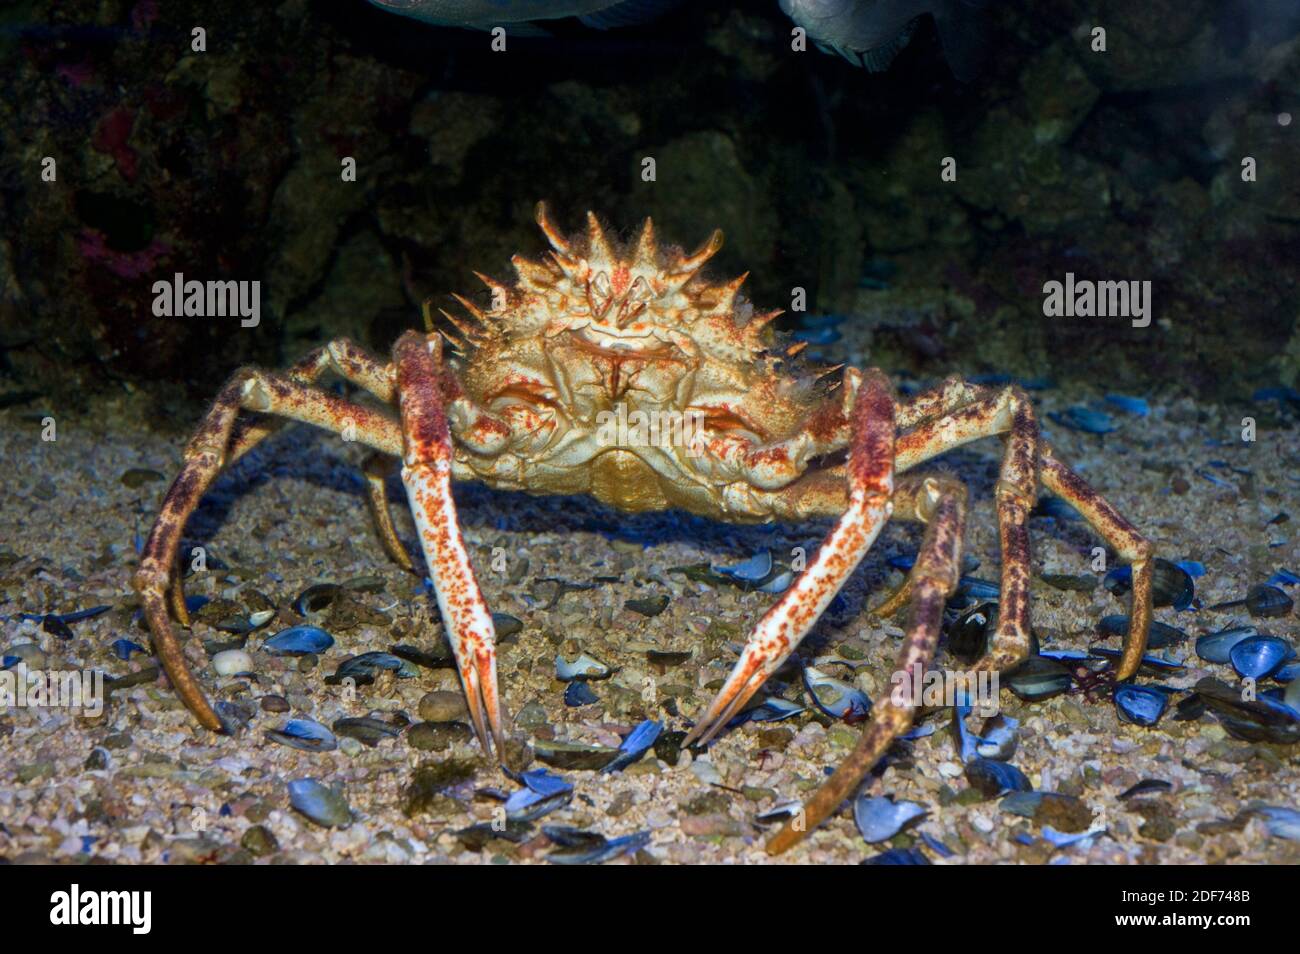 Spiny spider crab (Maja squinado) is an edible crab native to eastern Atlantic Ocean and Mediterranean Sea. Stock Photo